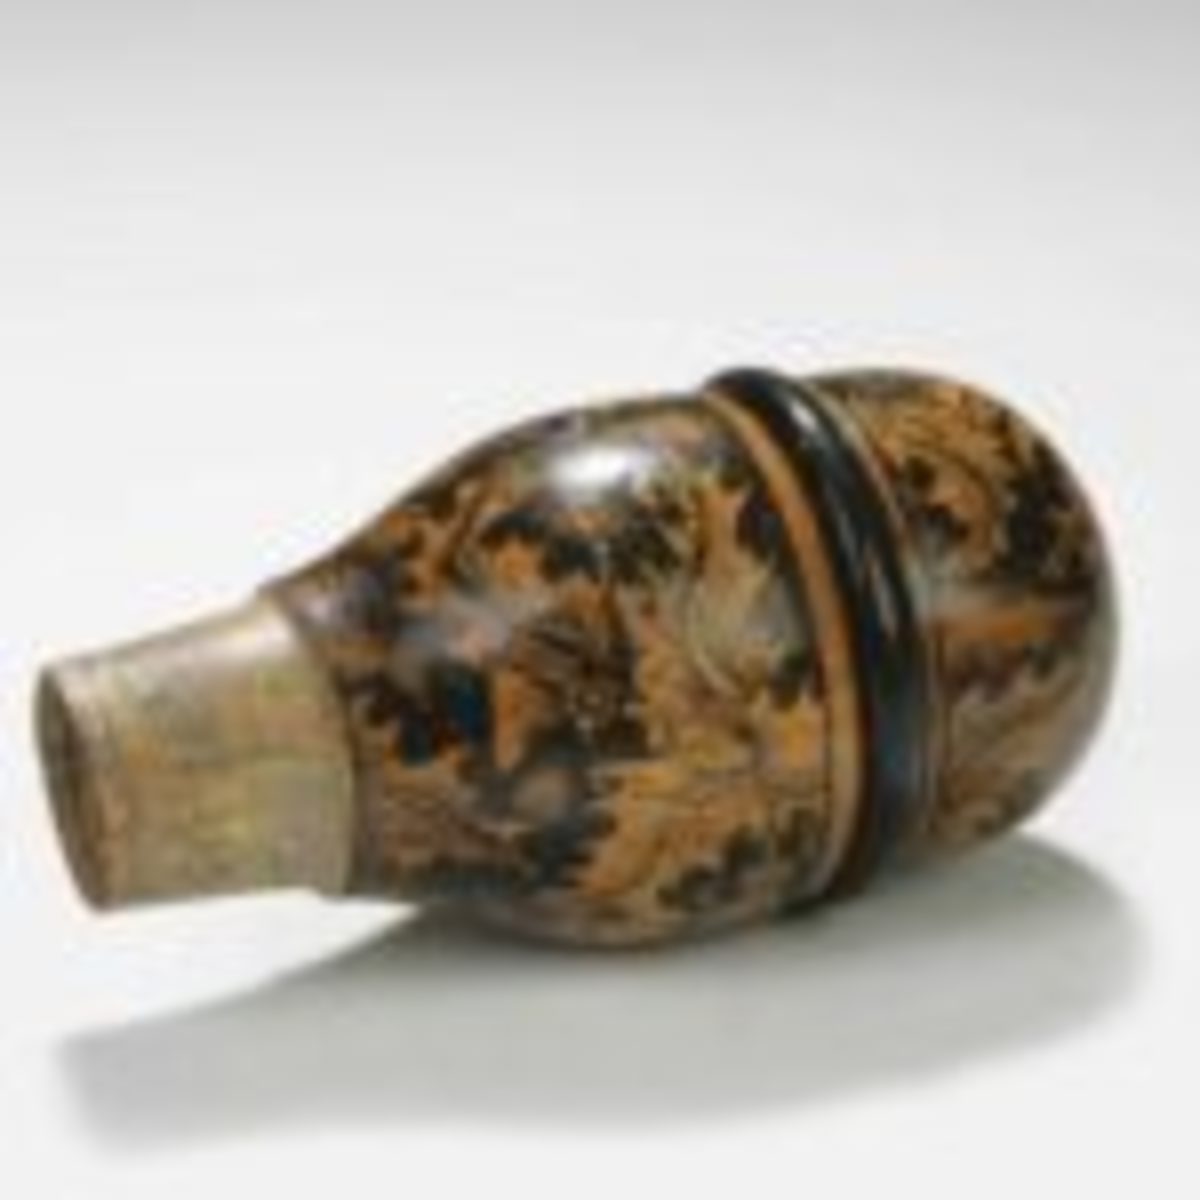 Acorn-form, thistle-decorated Mauchline (Scottish) penwork snuff flask with pewter dispenser, circa 1820, realized $386 including buyer’s premium in 2006. Courtesy of Bonhams, www.bonhams.com